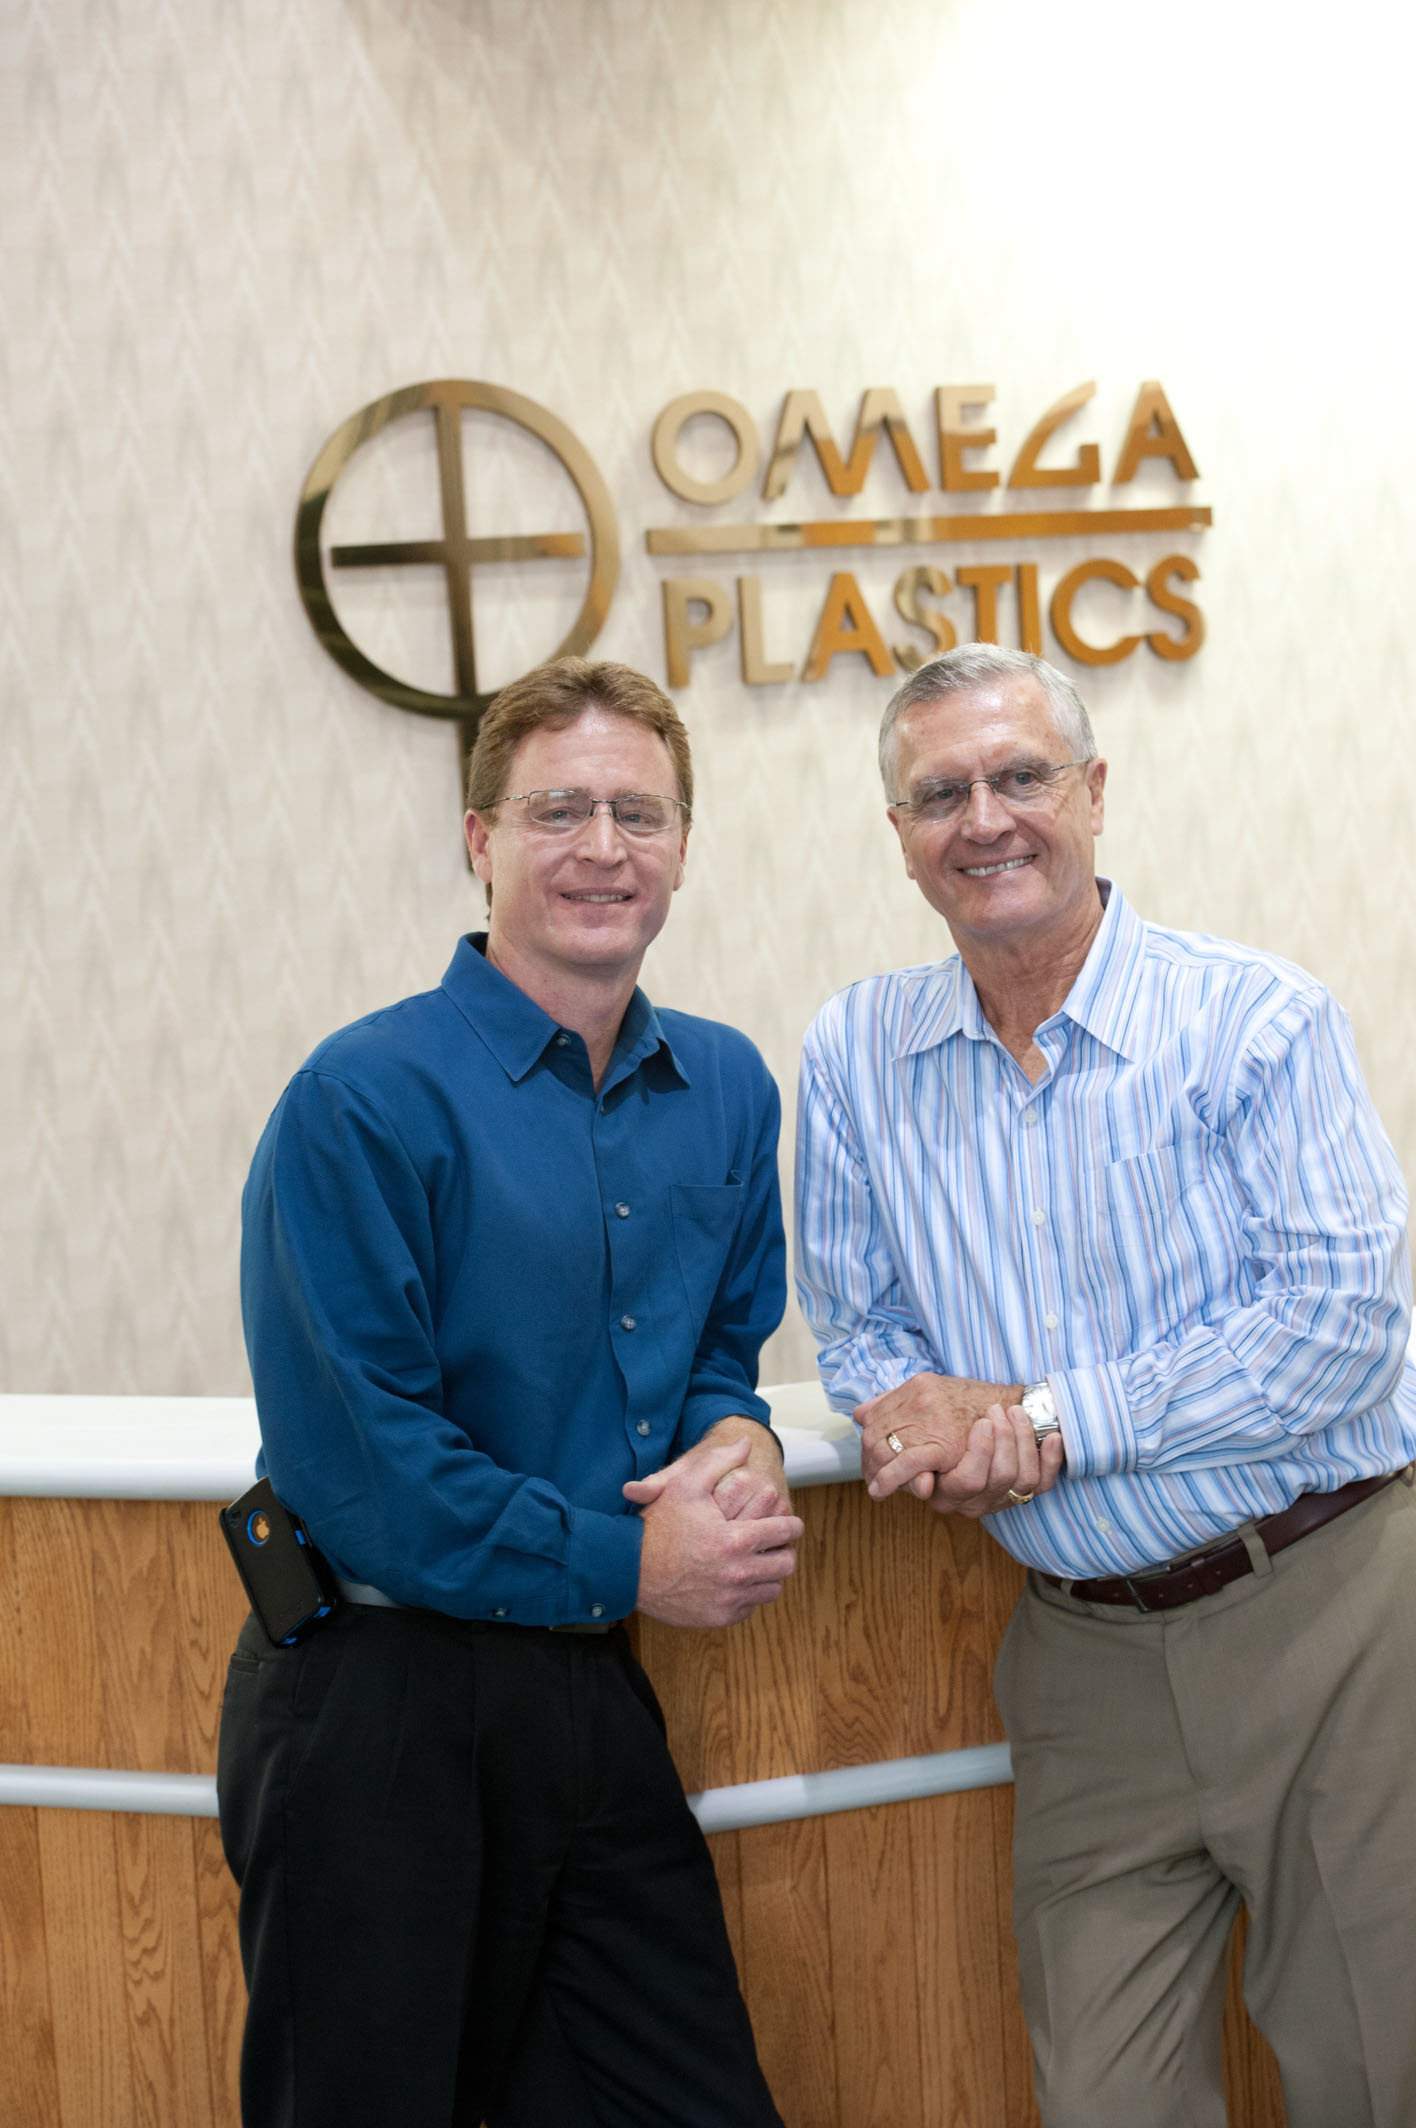 About Omega Plastics